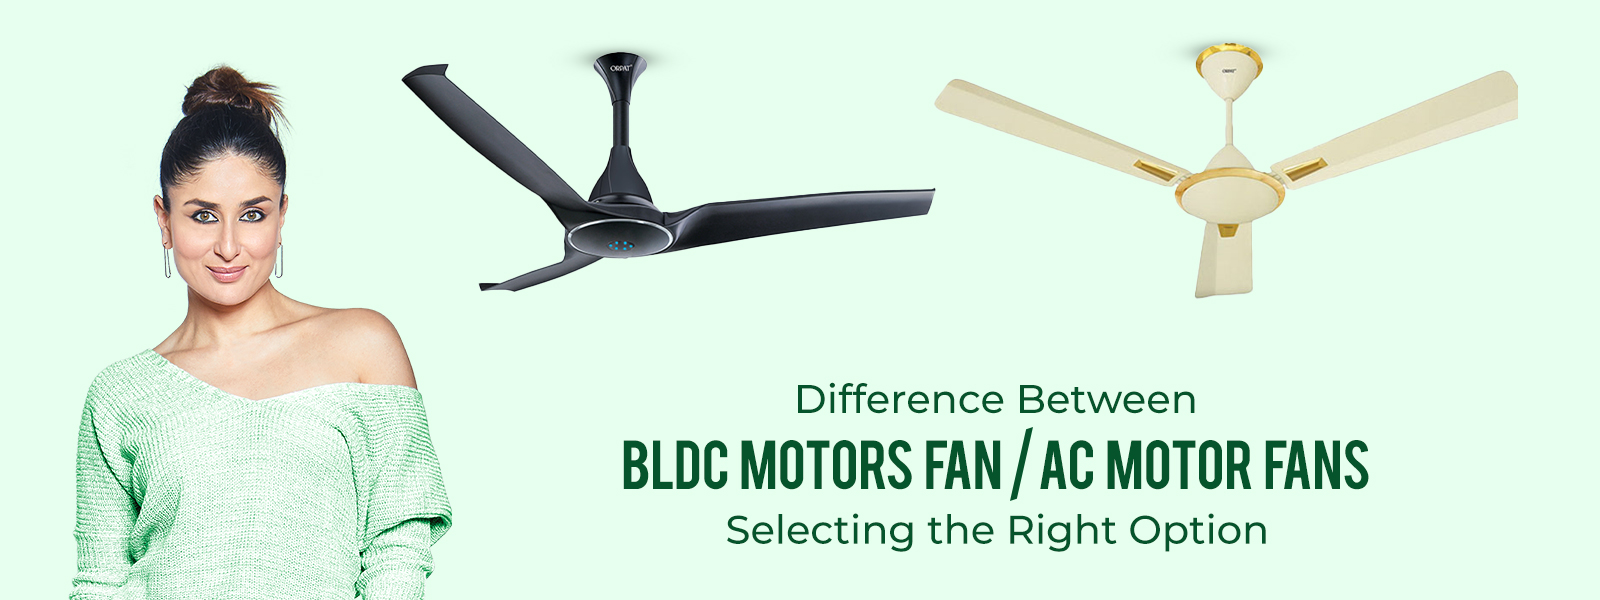 Bldc Motor Fans Ac